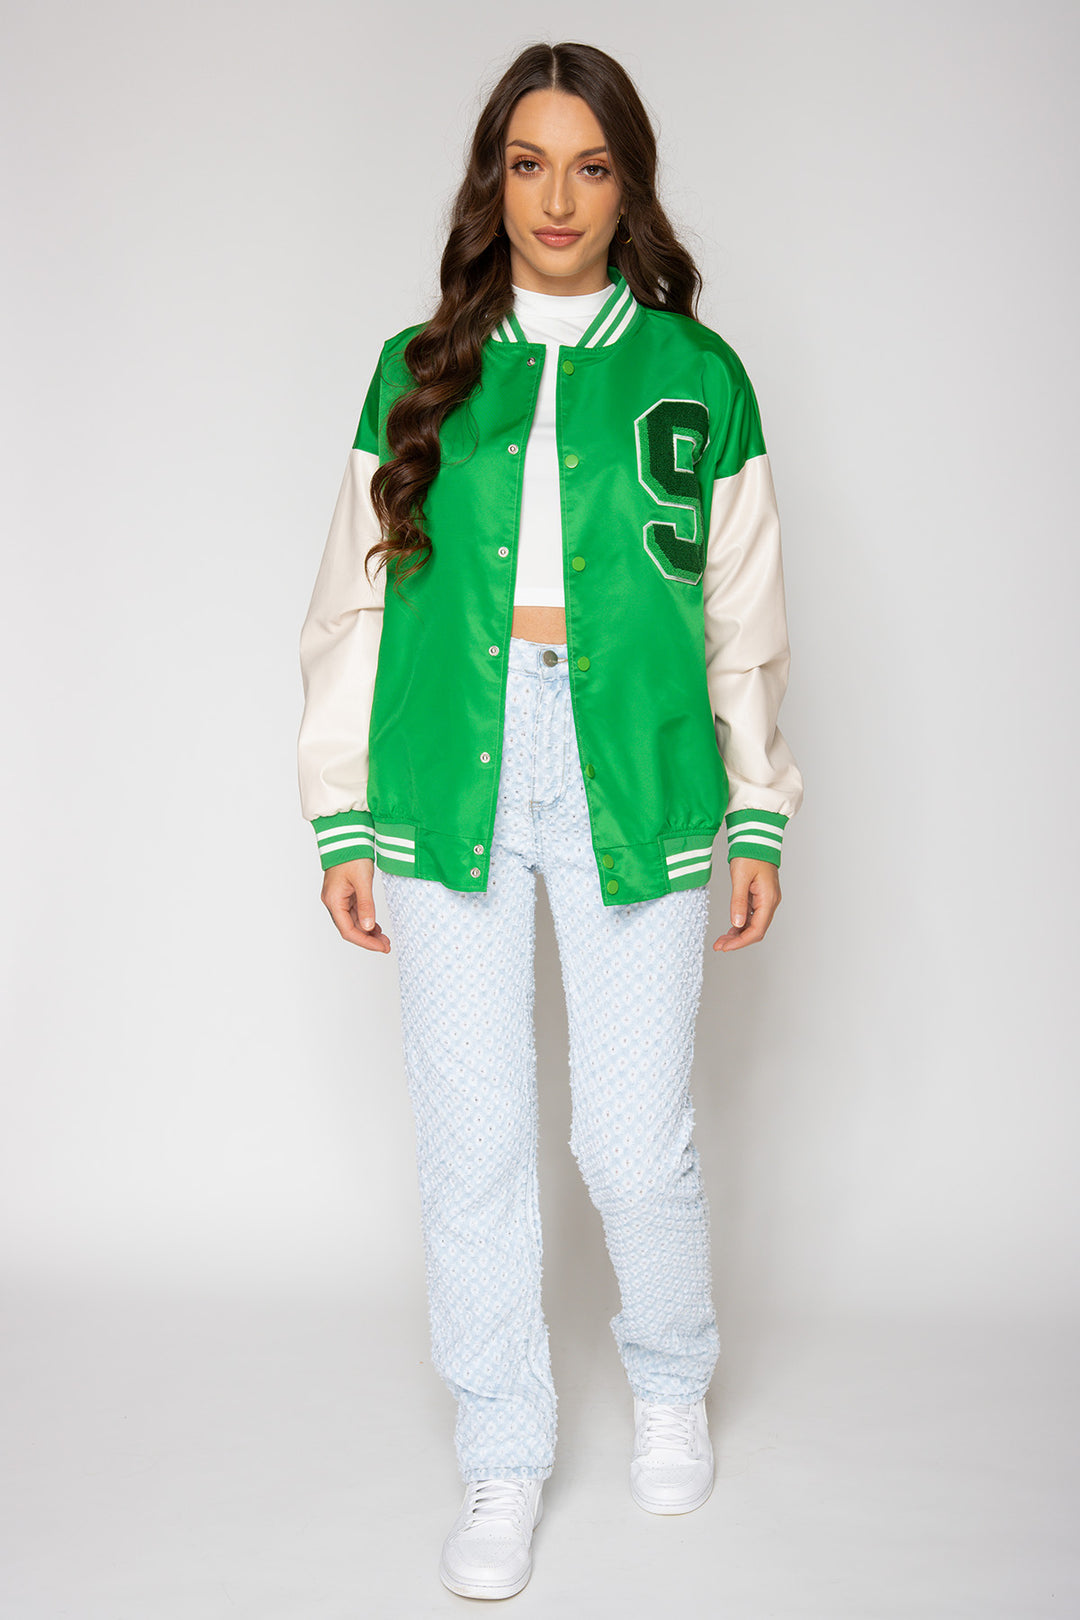 Jaelyn S Varsity Jacket - Green Jacket Routines Fashion   